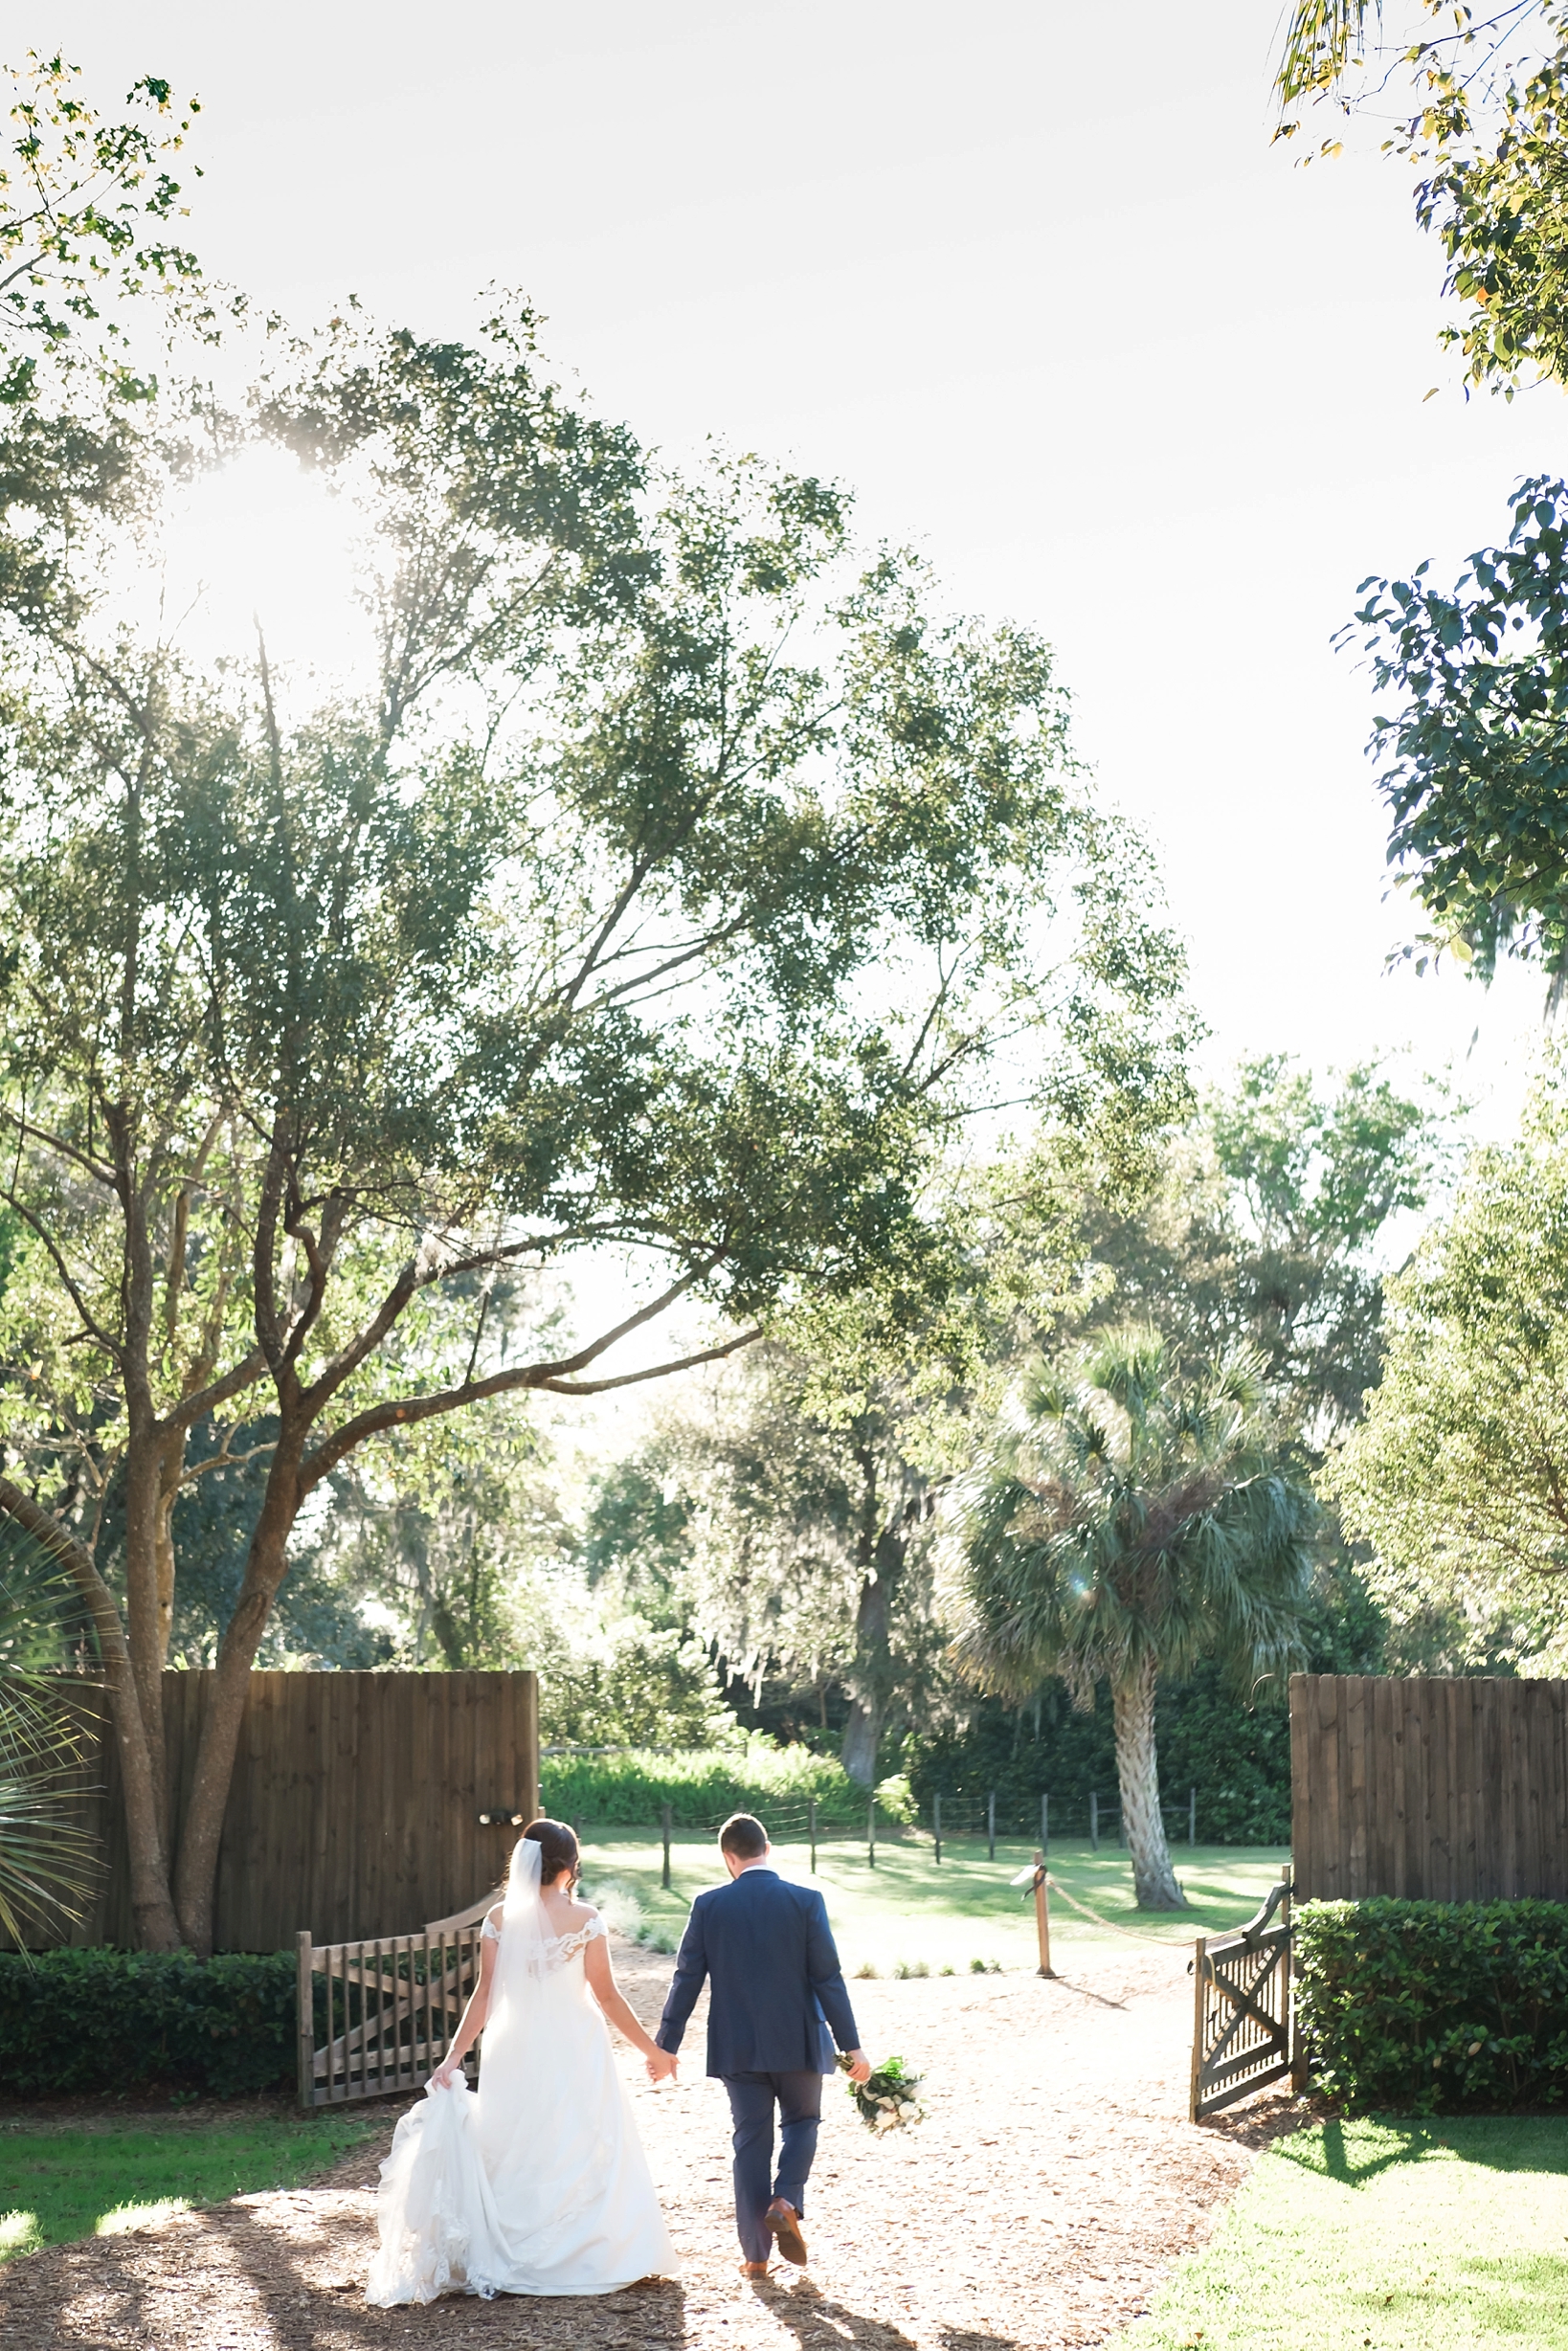 The Bride and Groom walk to their wedding reception under the warm Florida sun